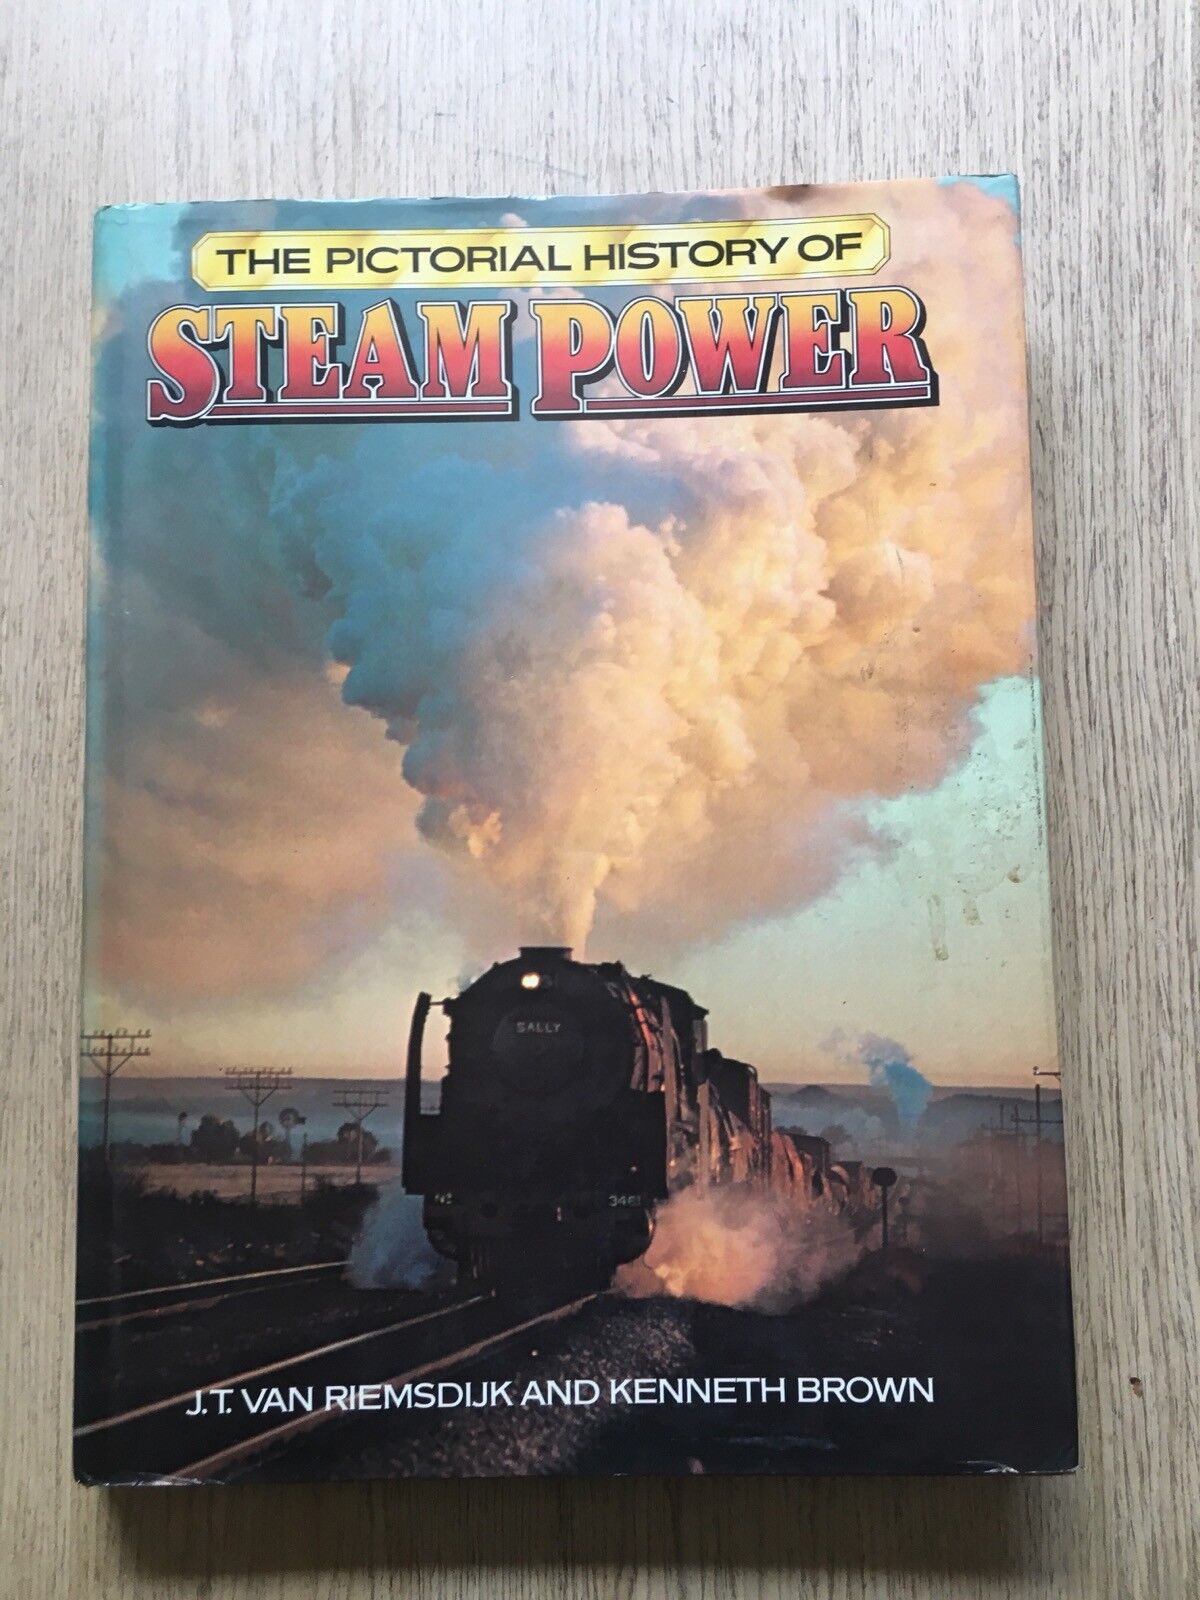 1980 'THE PICTORIAL HISTORY OF STEAM POWER' BY J.T.VAN RIEMSDIJK & KENNETH BROWN